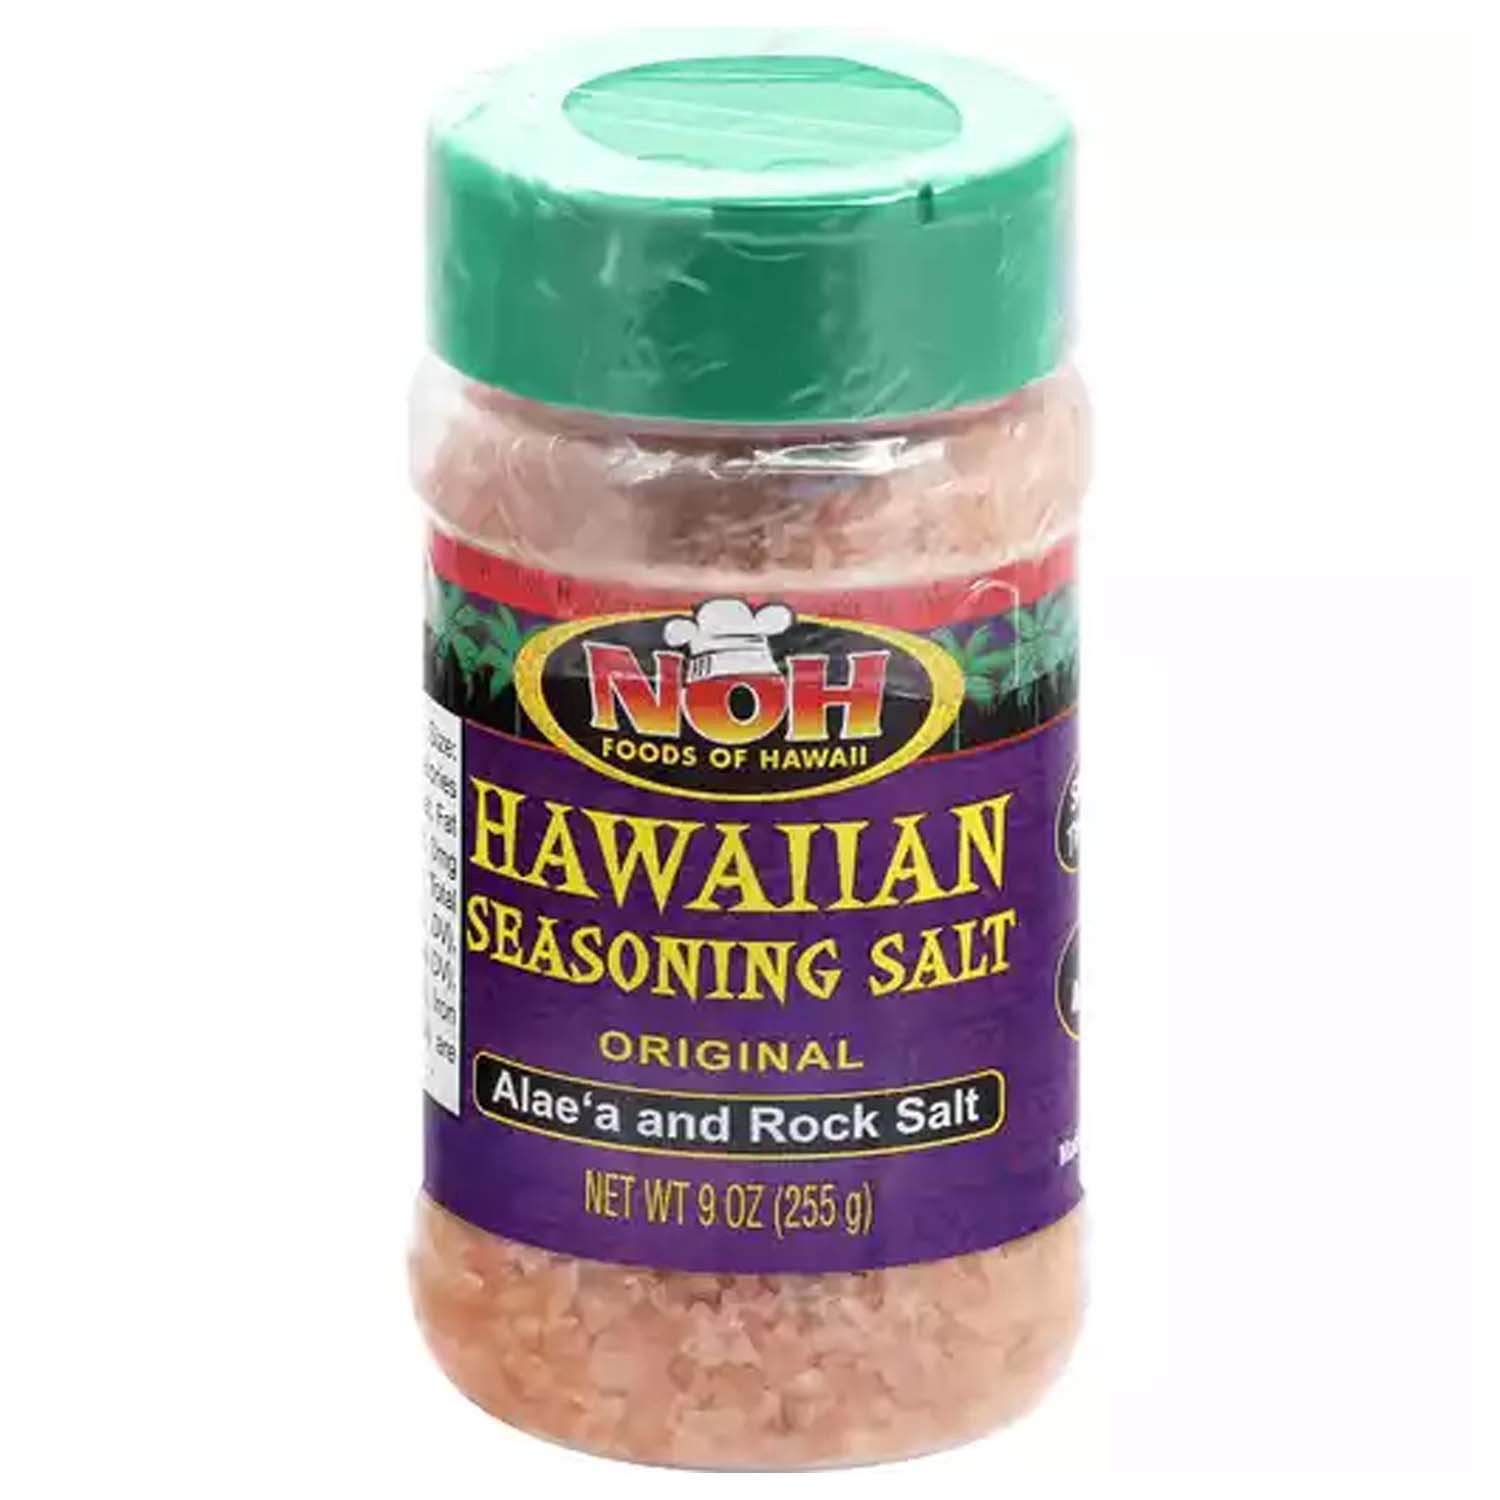  NoSalt Original Sodium-Free Salt Alternative, 11 oz : Combined  Pepper And Salt Shakers : Grocery & Gourmet Food